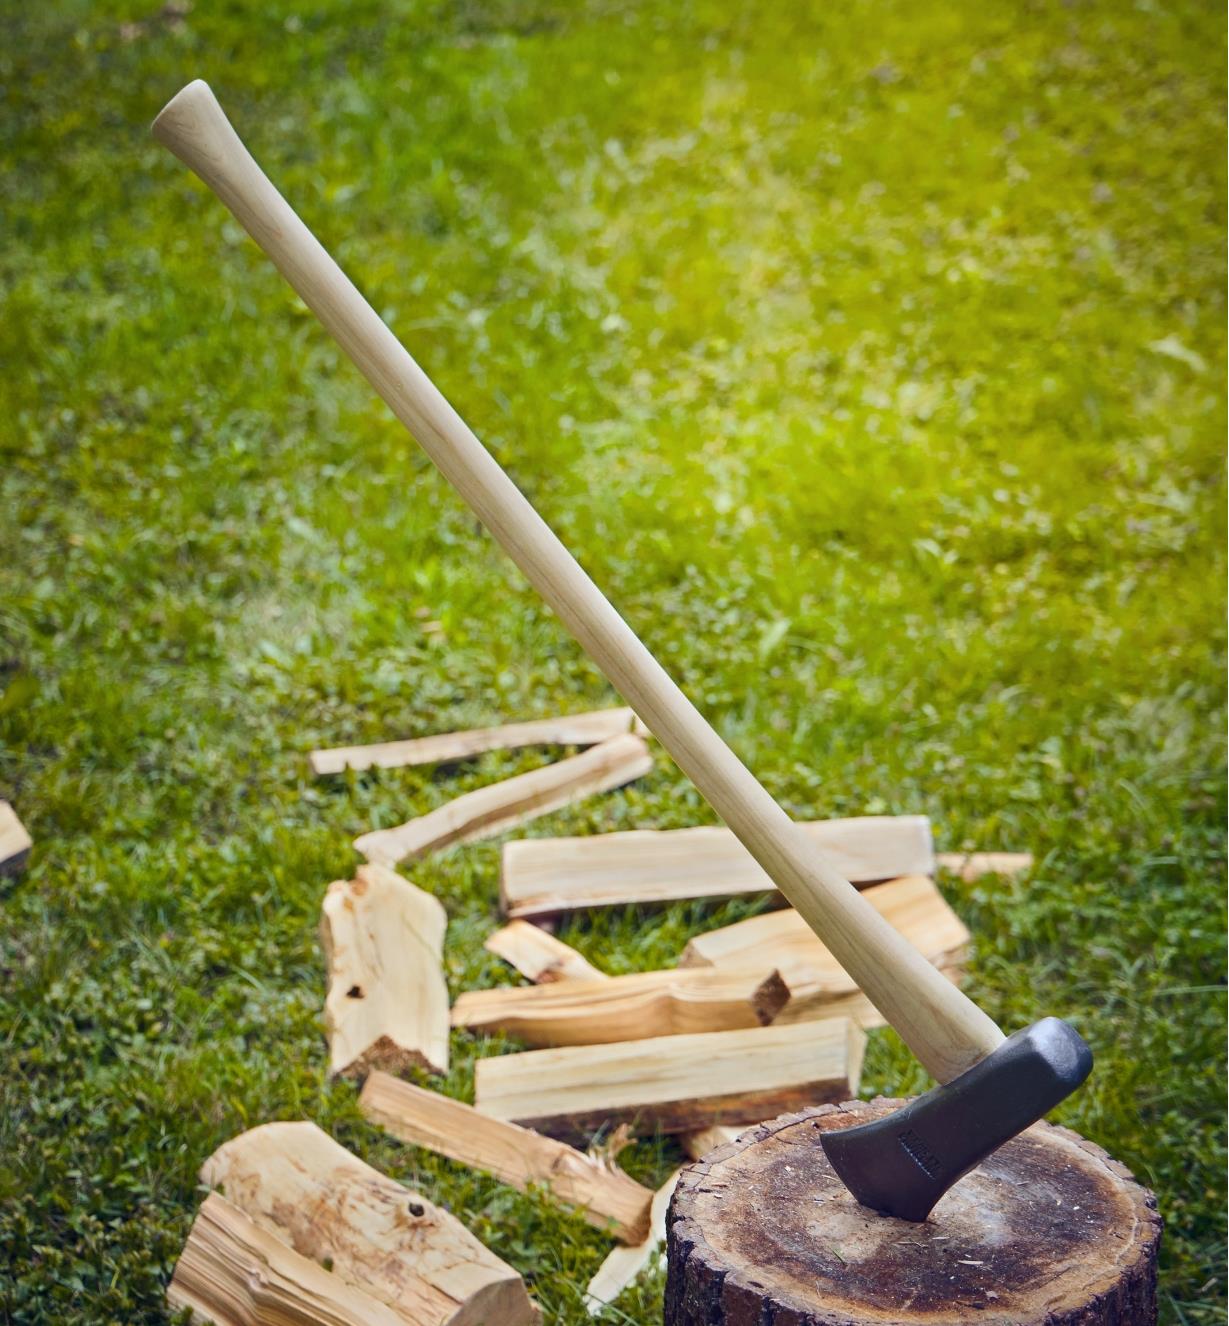 A maul embedded in a wood chopping block